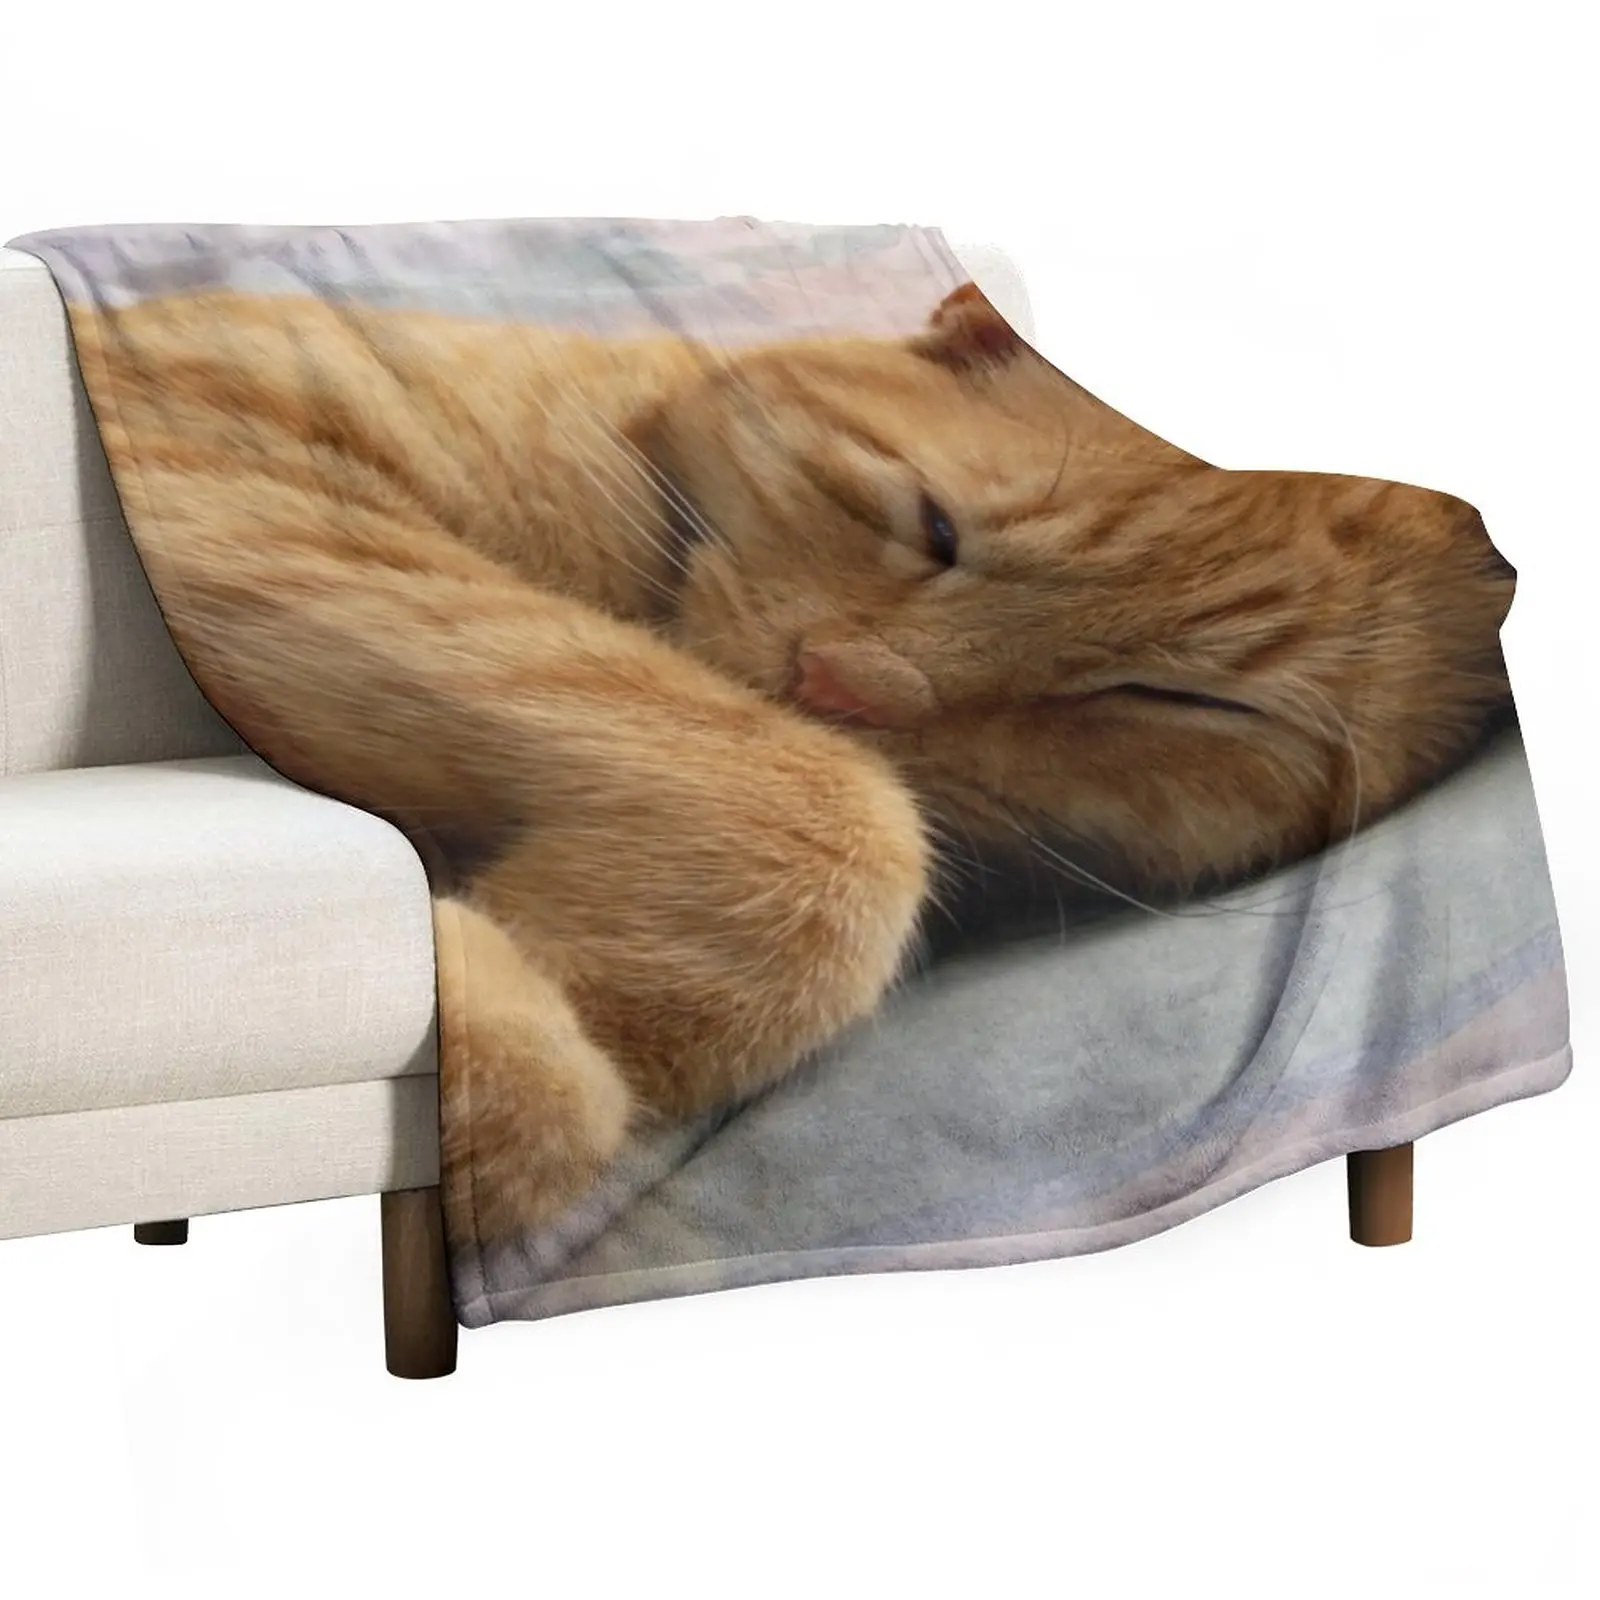 

Ginger Cat Sleeping Throw Blanket Retro Blankets Plaid on the sofa